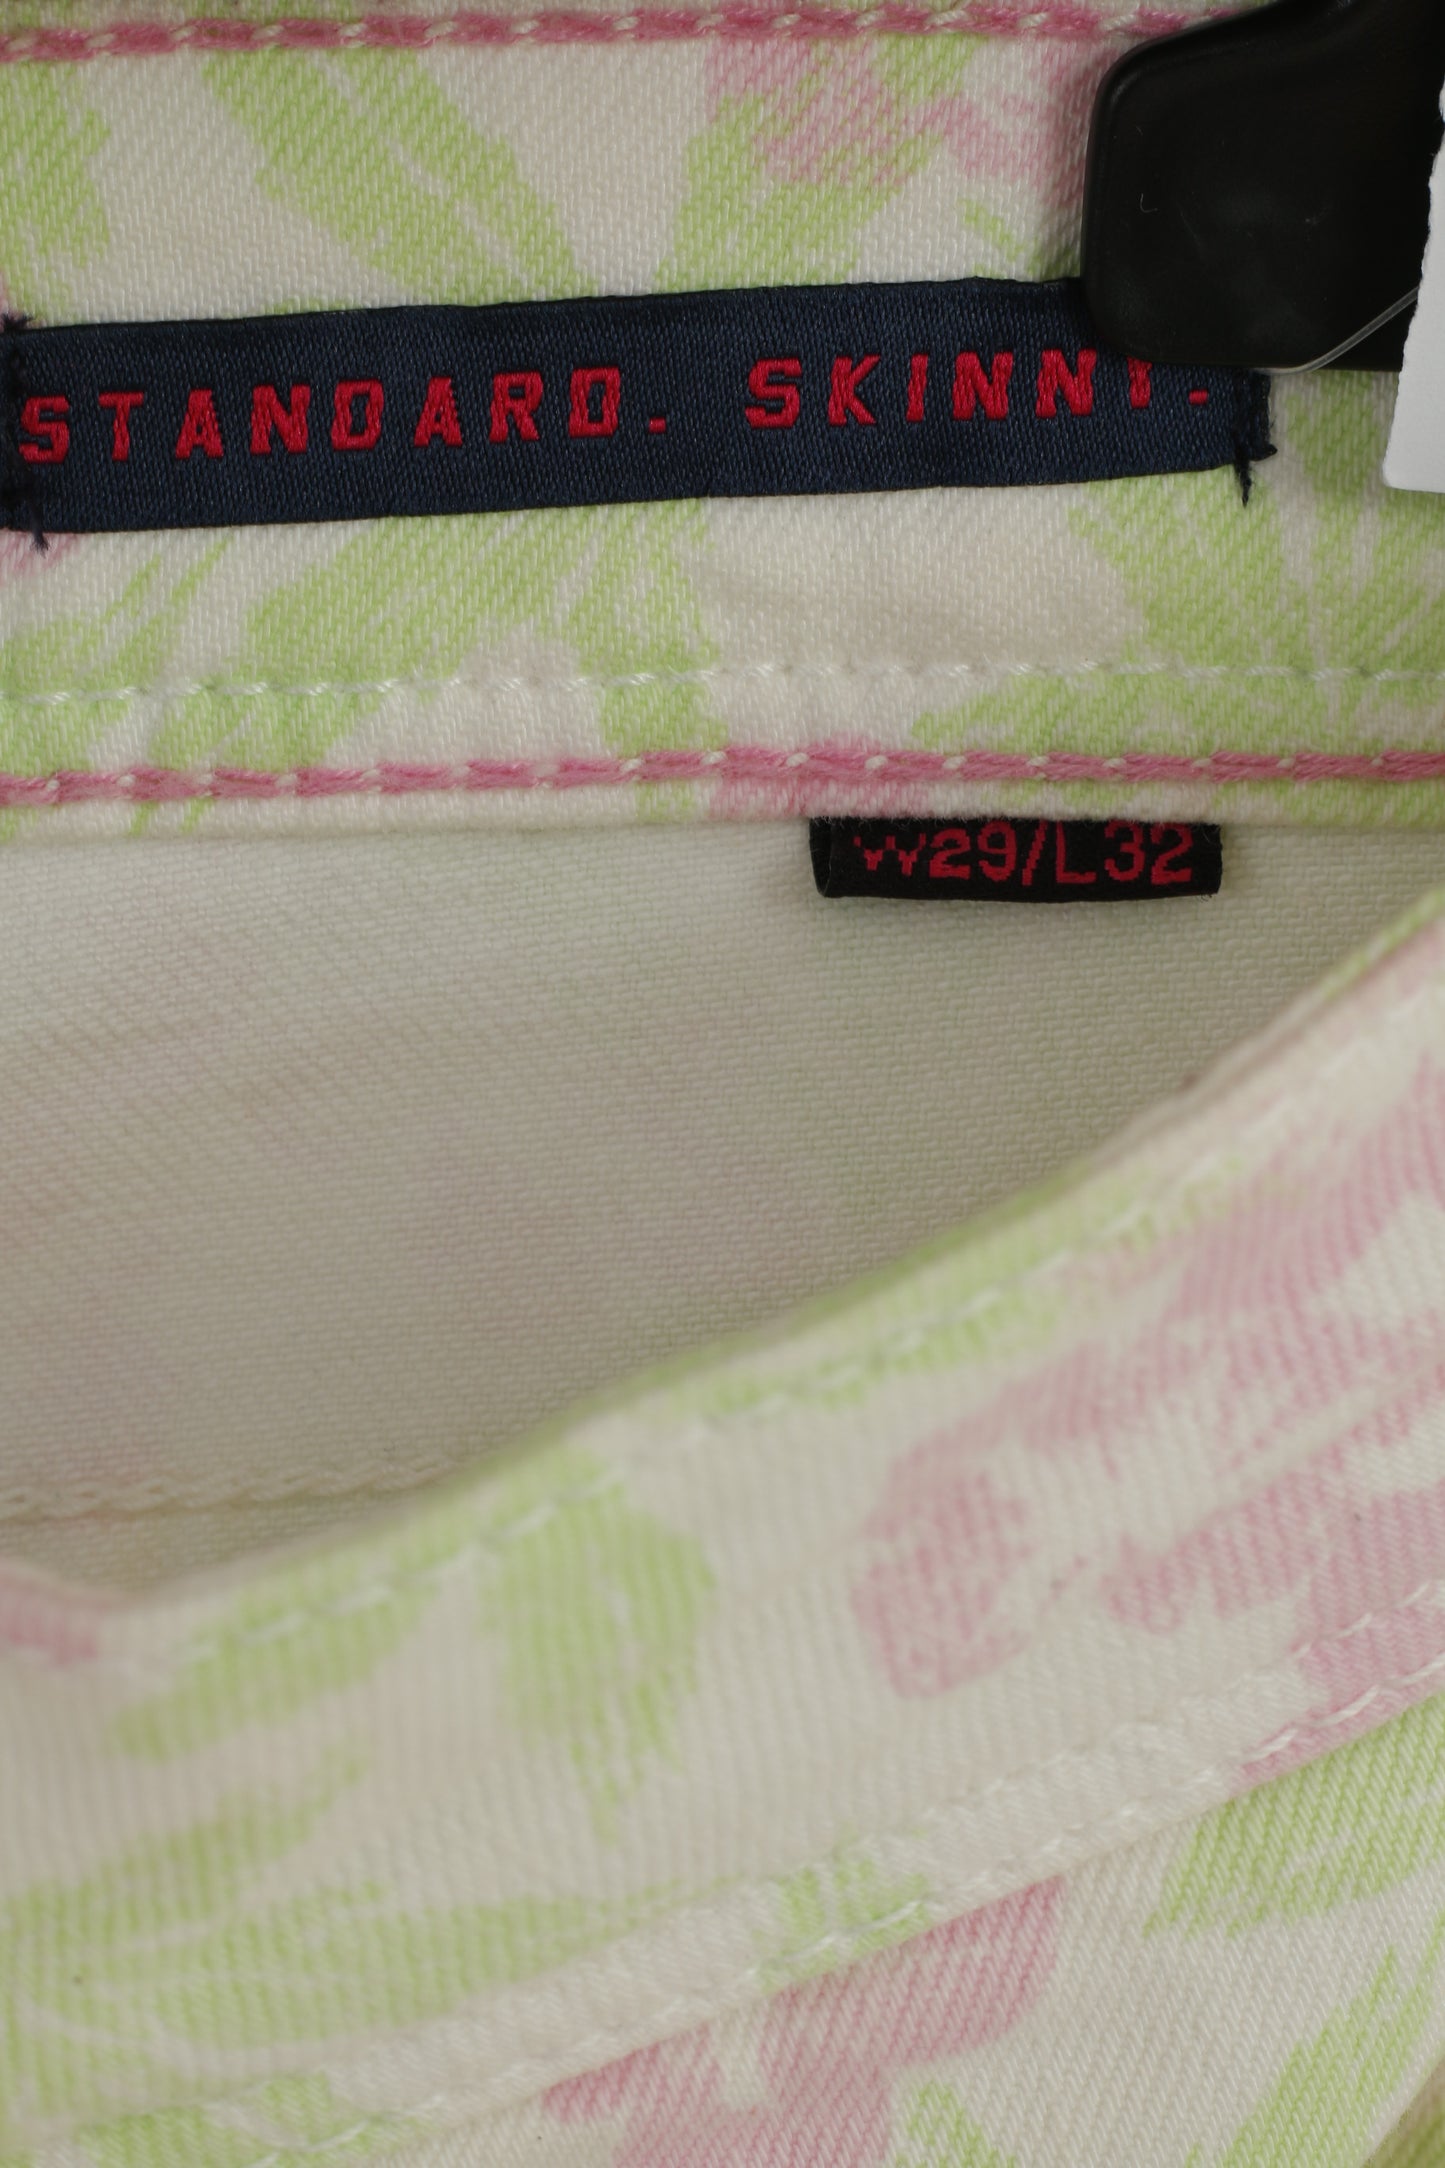 Pantaloni Superdry da donna W 29 L 32 Pantaloni skinny standard in cotone bianco floreale neon